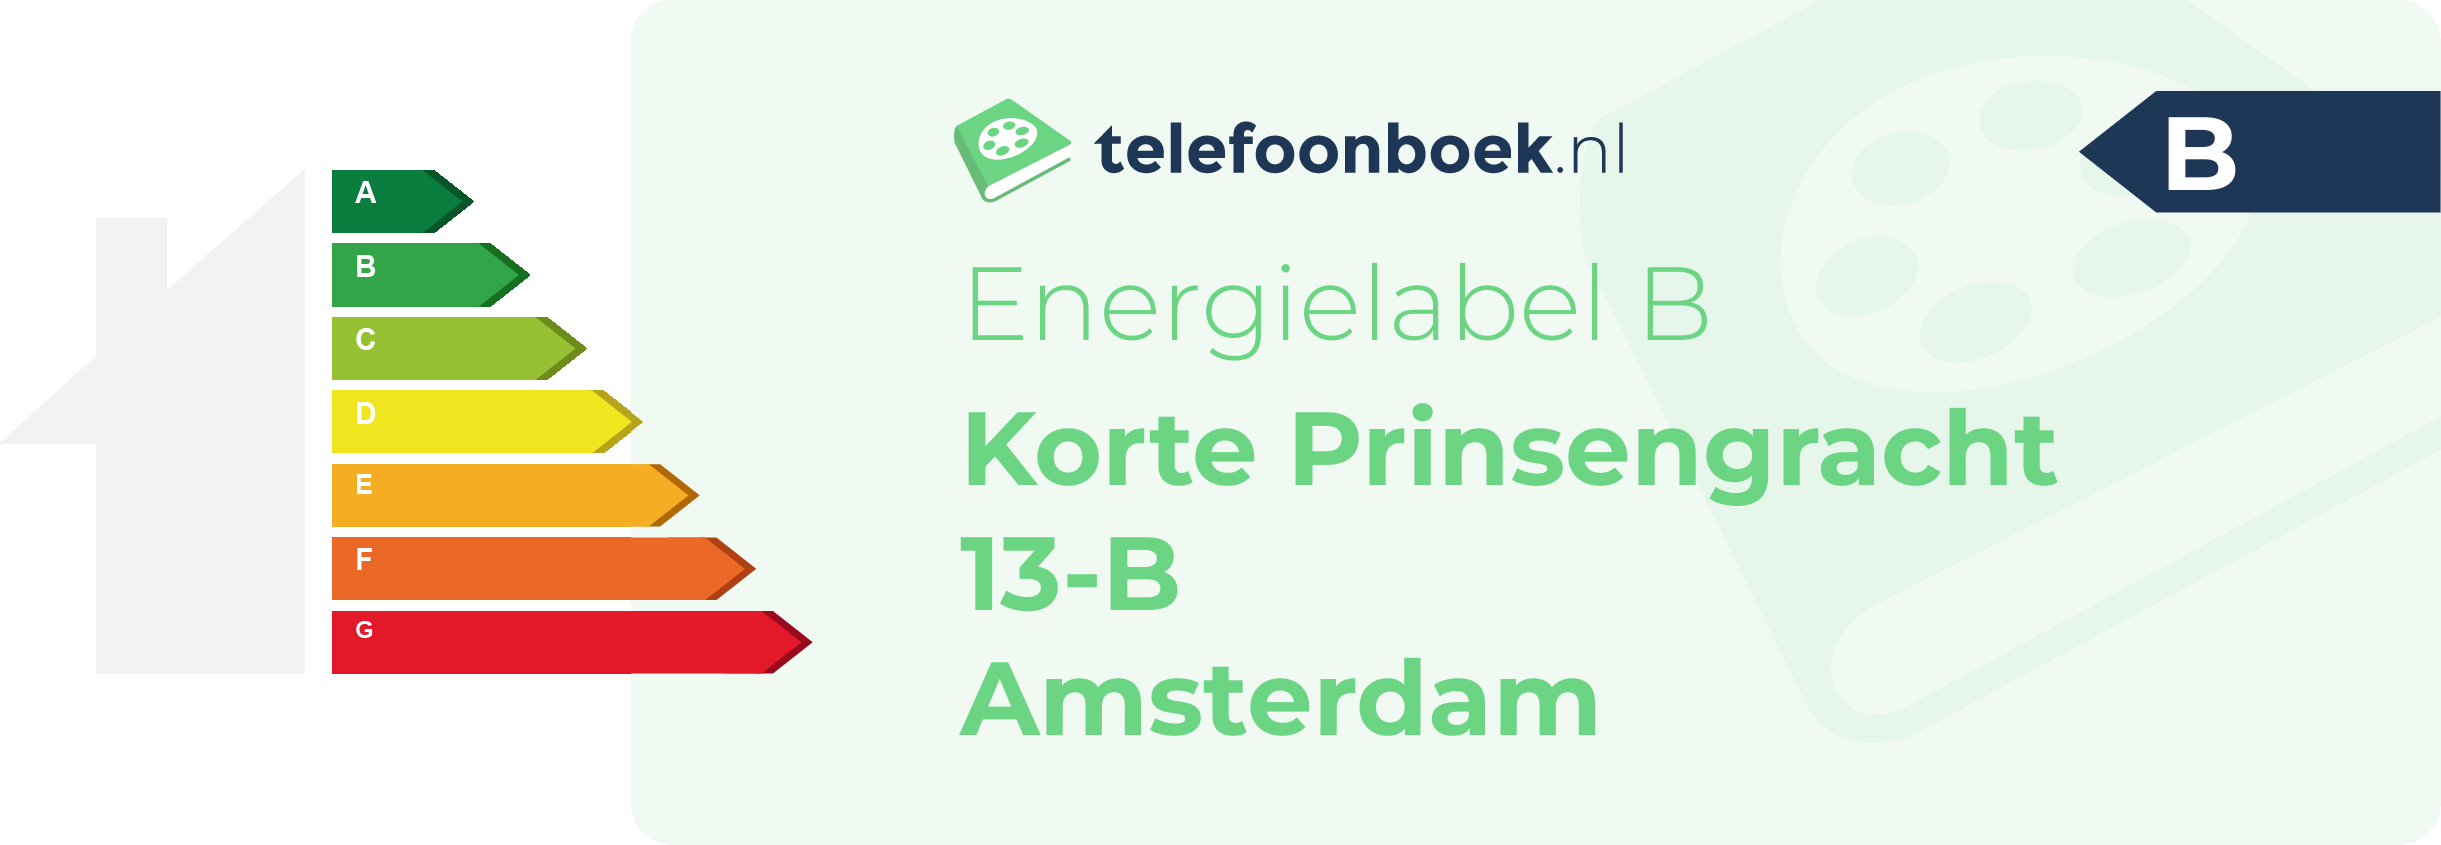 Energielabel Korte Prinsengracht 13-B Amsterdam